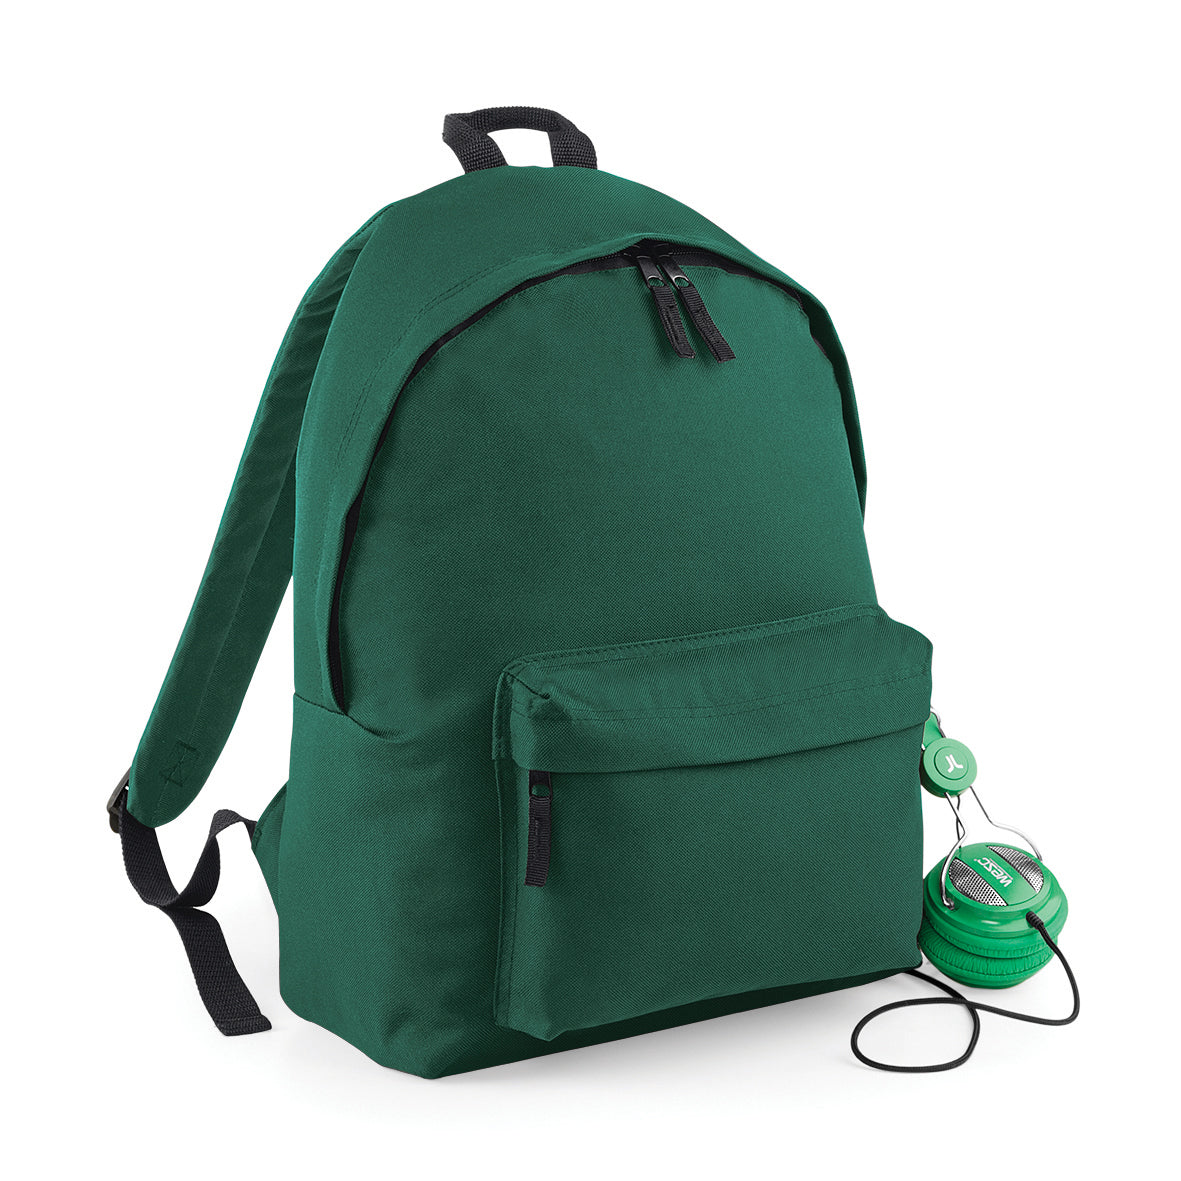 Personalised Original fashion backpack - Personalise It